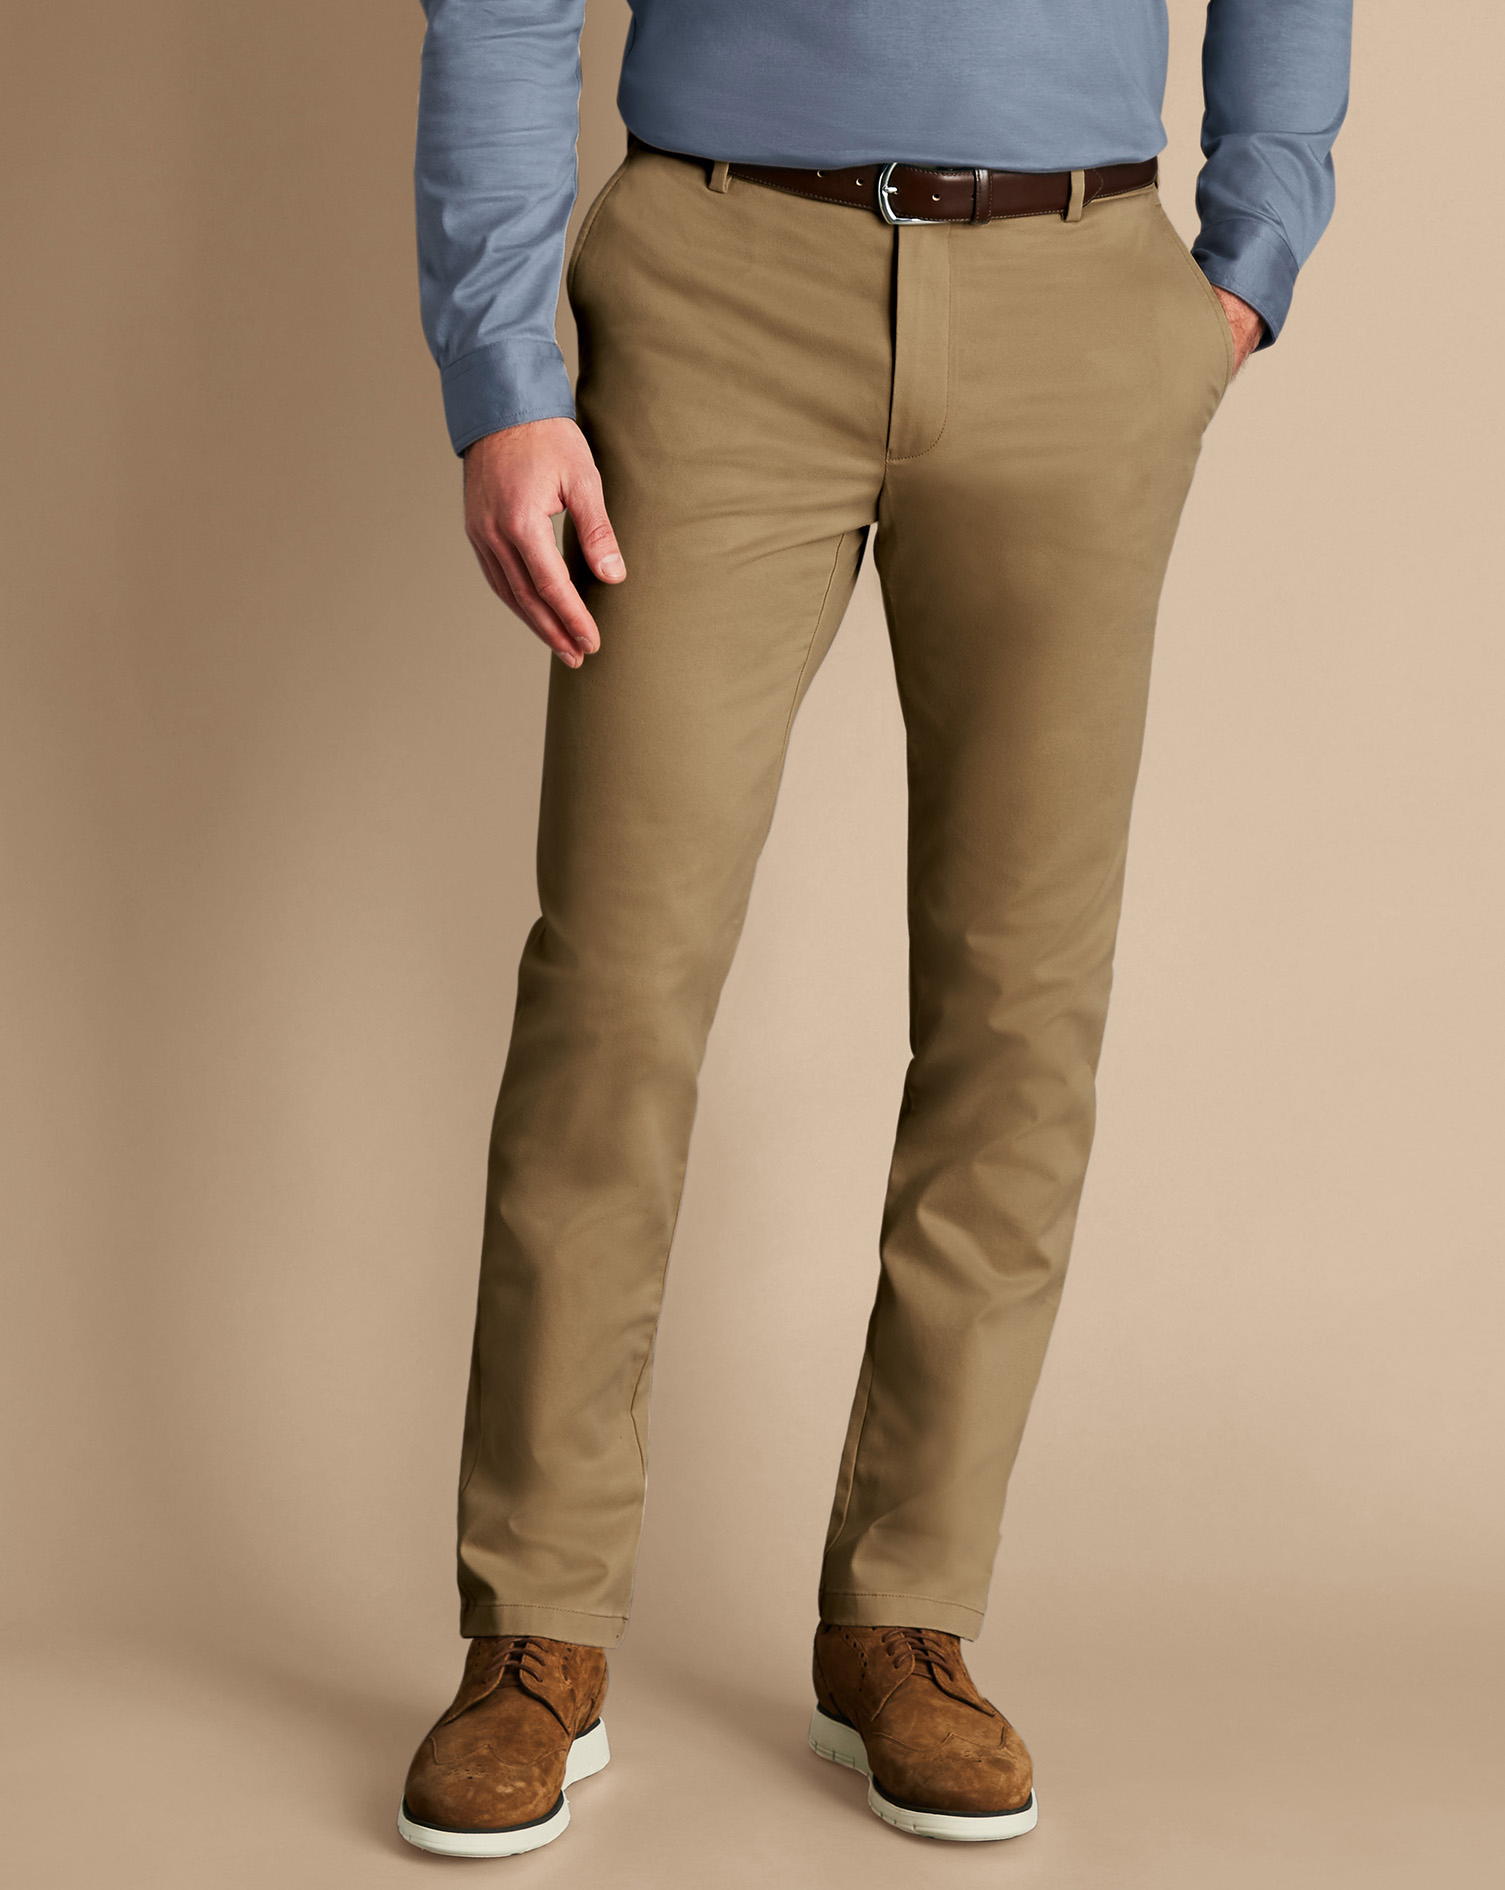 Men's Charles Tyrwhitt Ultimate Non-Iron Chino Pants - Tan Neutral Size W32 L30 Cotton
